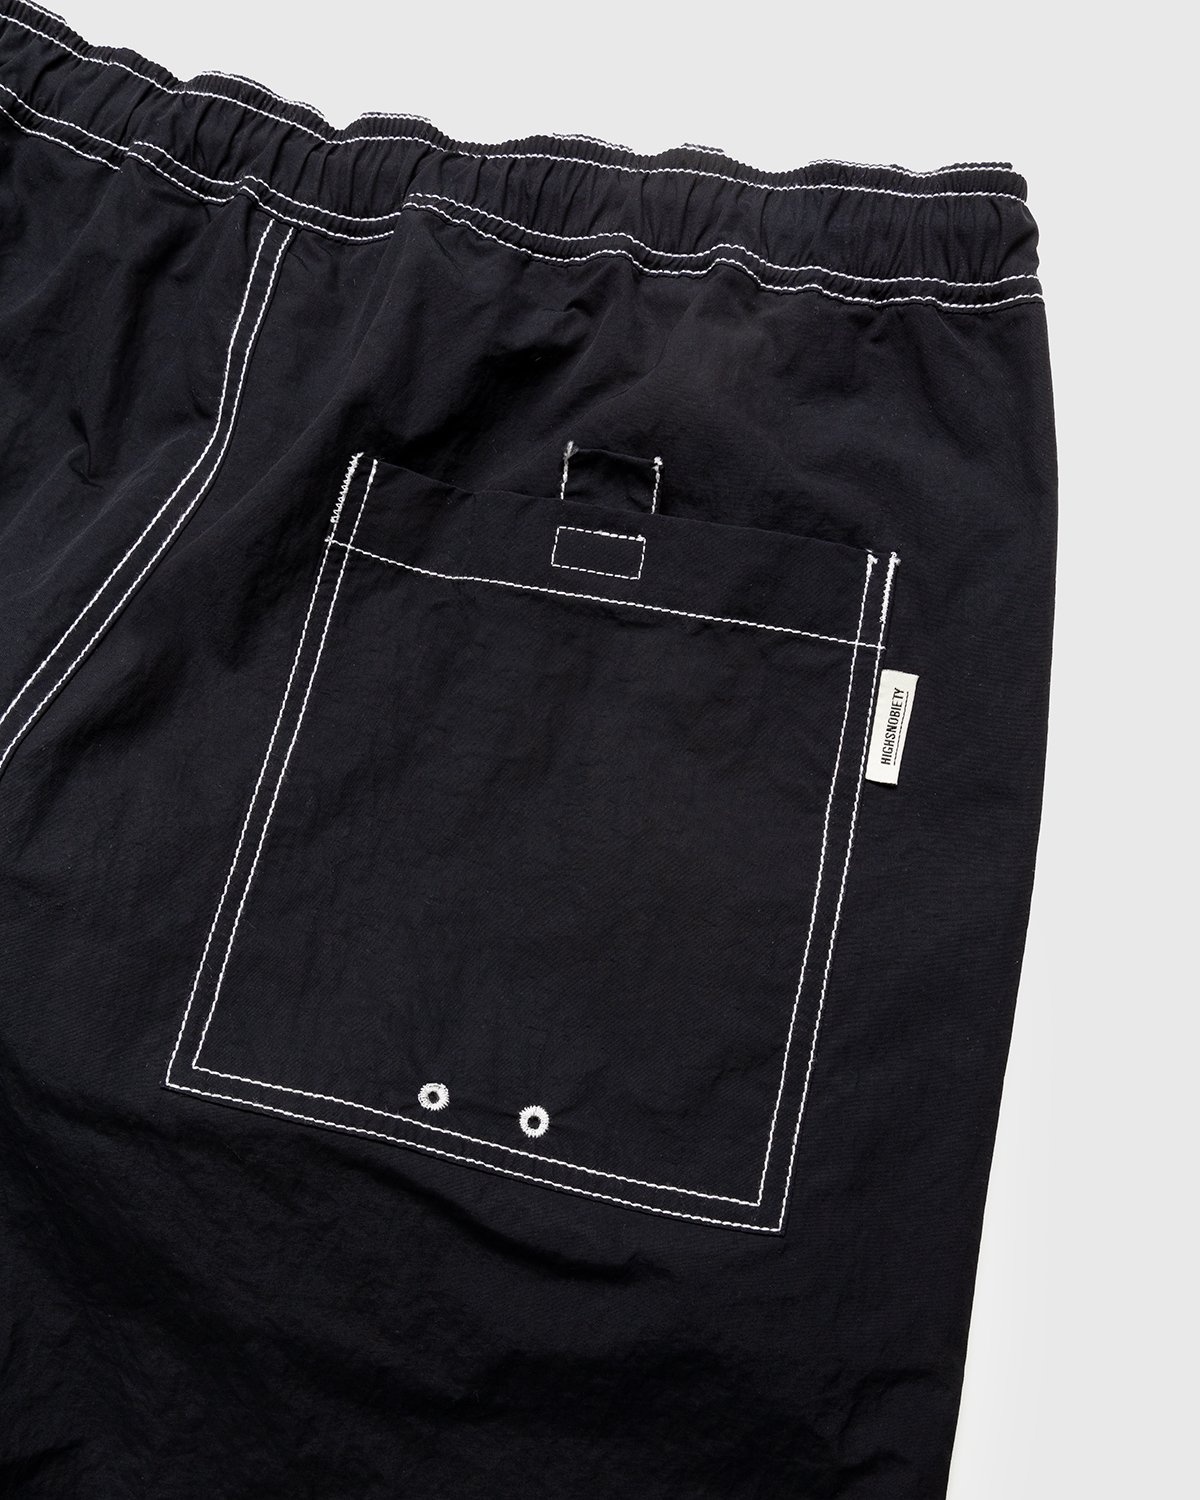 Highsnobiety – Contrast Brushed Nylon Elastic Pants Black - Pants - Black - Image 3